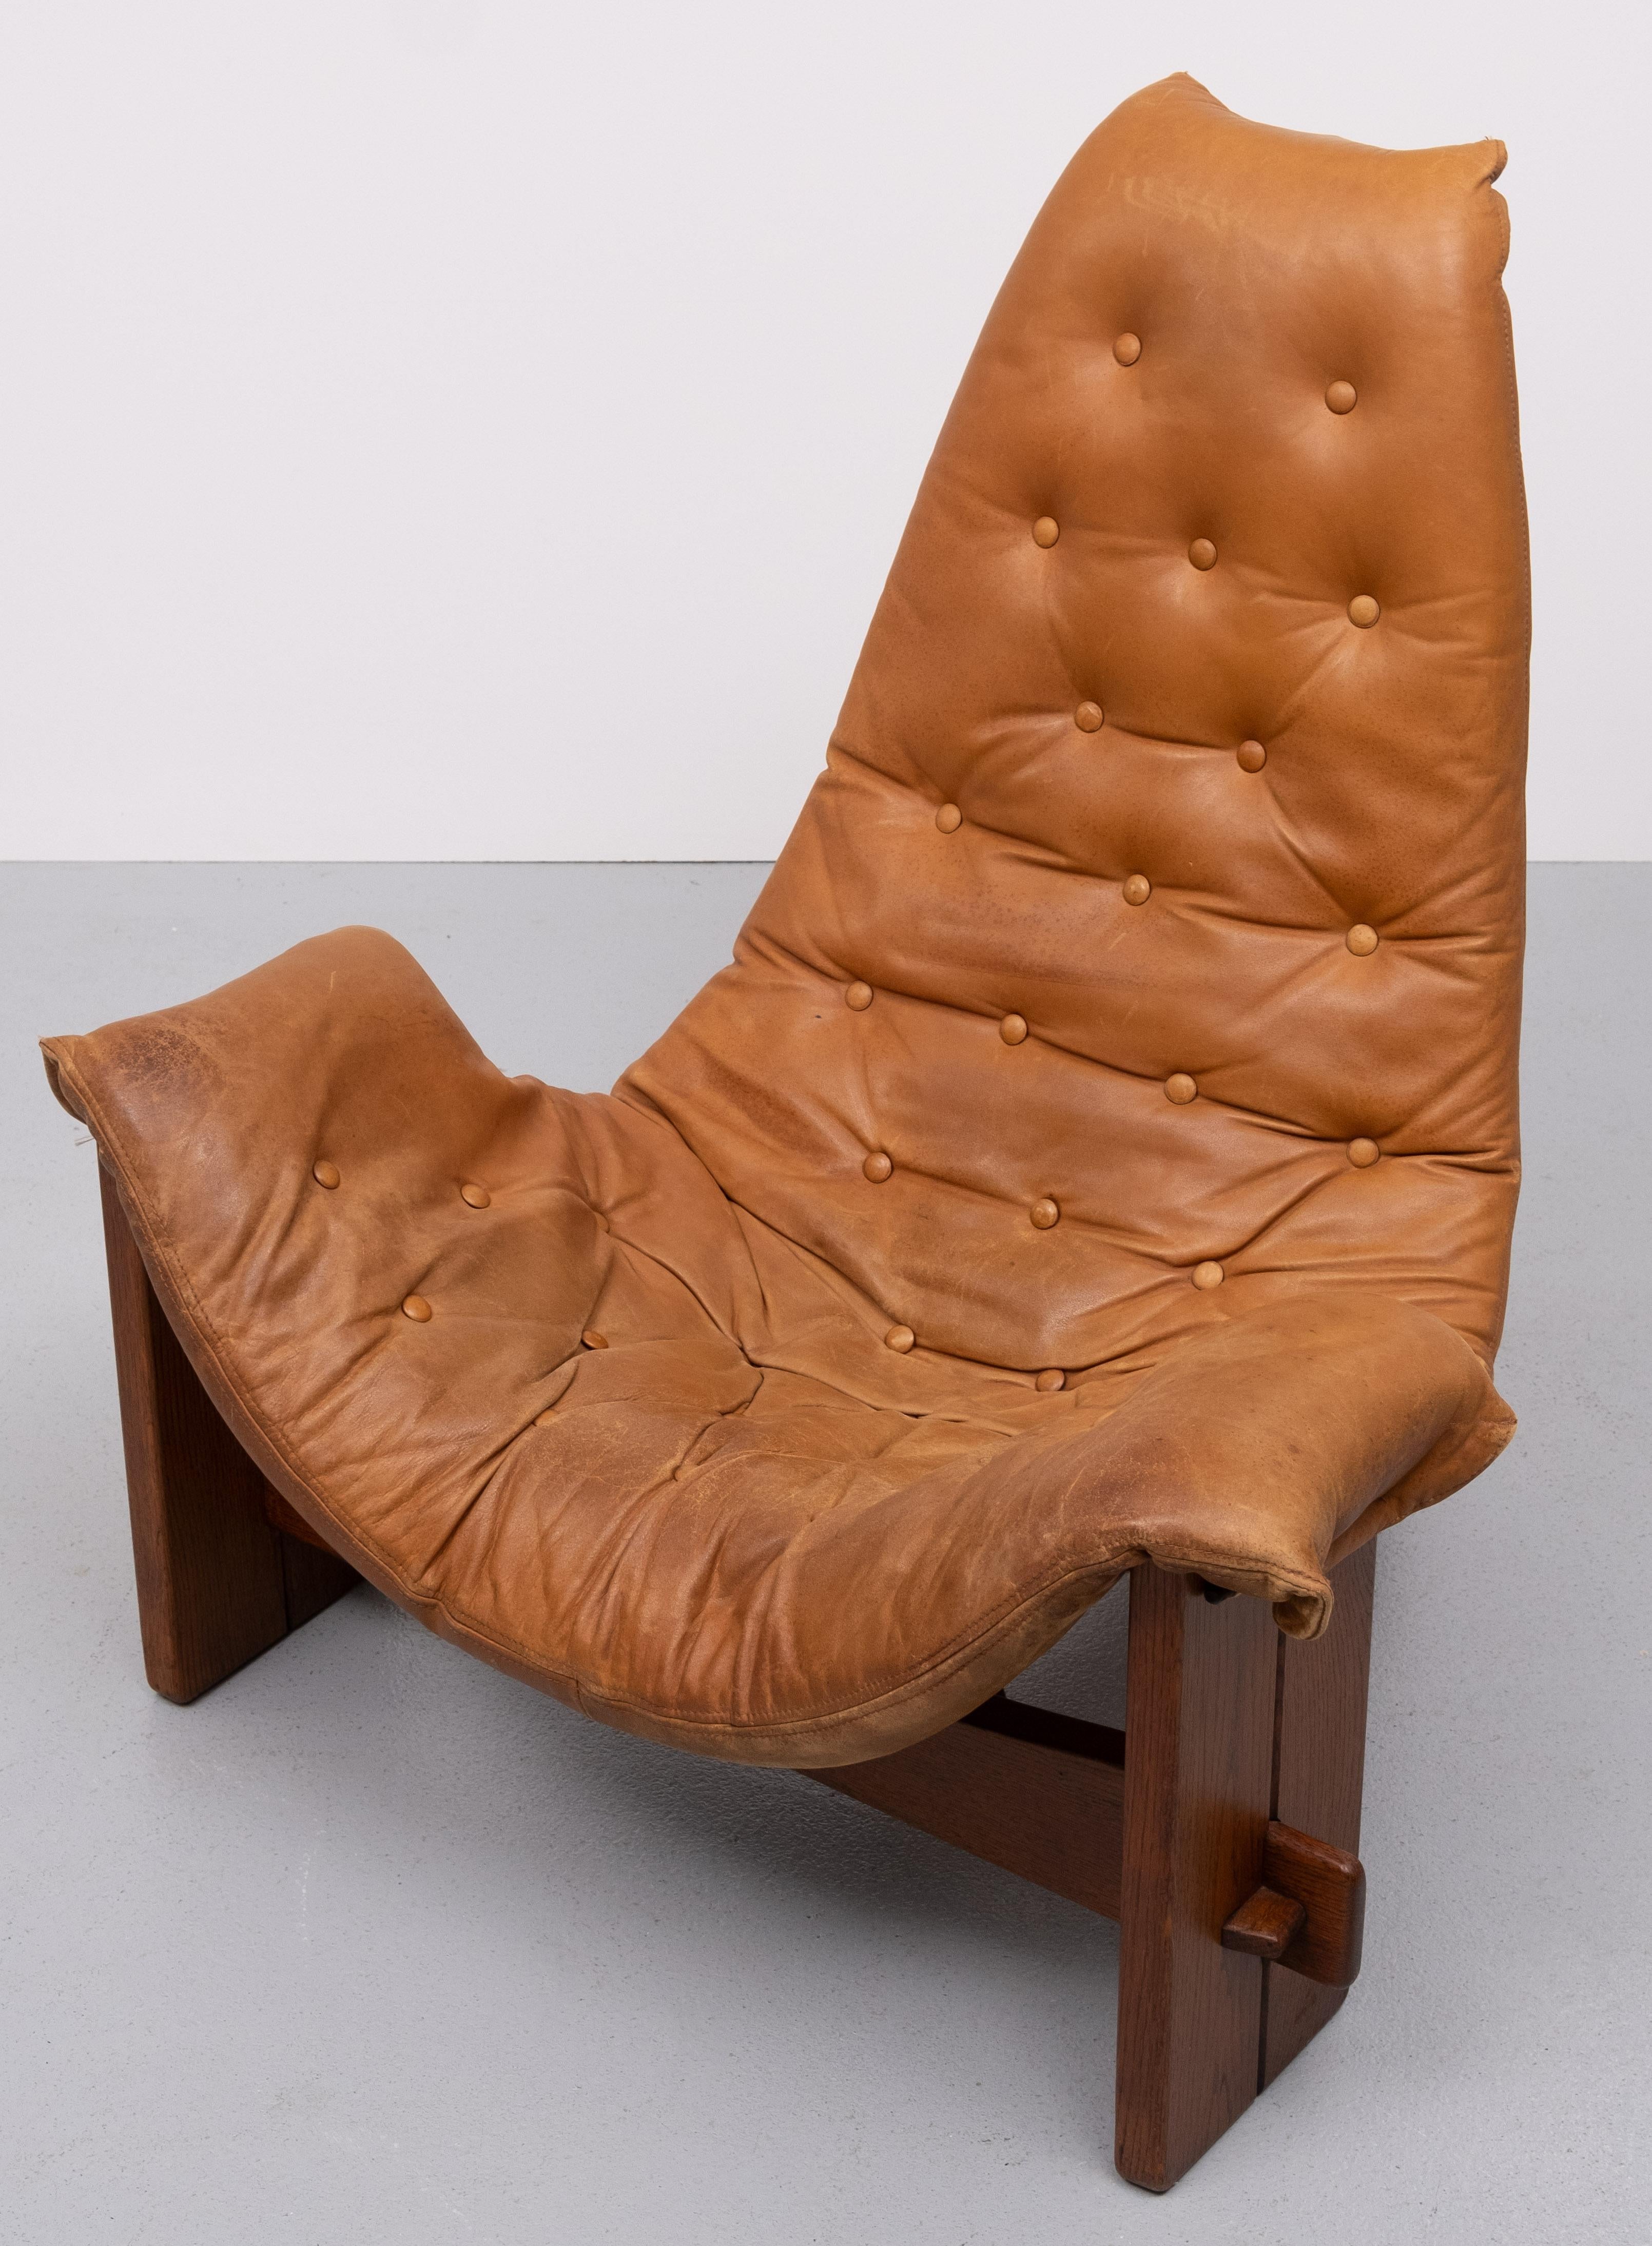 Brazilian  Brutalist Sling Lounge Chair in Full Original Condition 1960s Brazil  For Sale